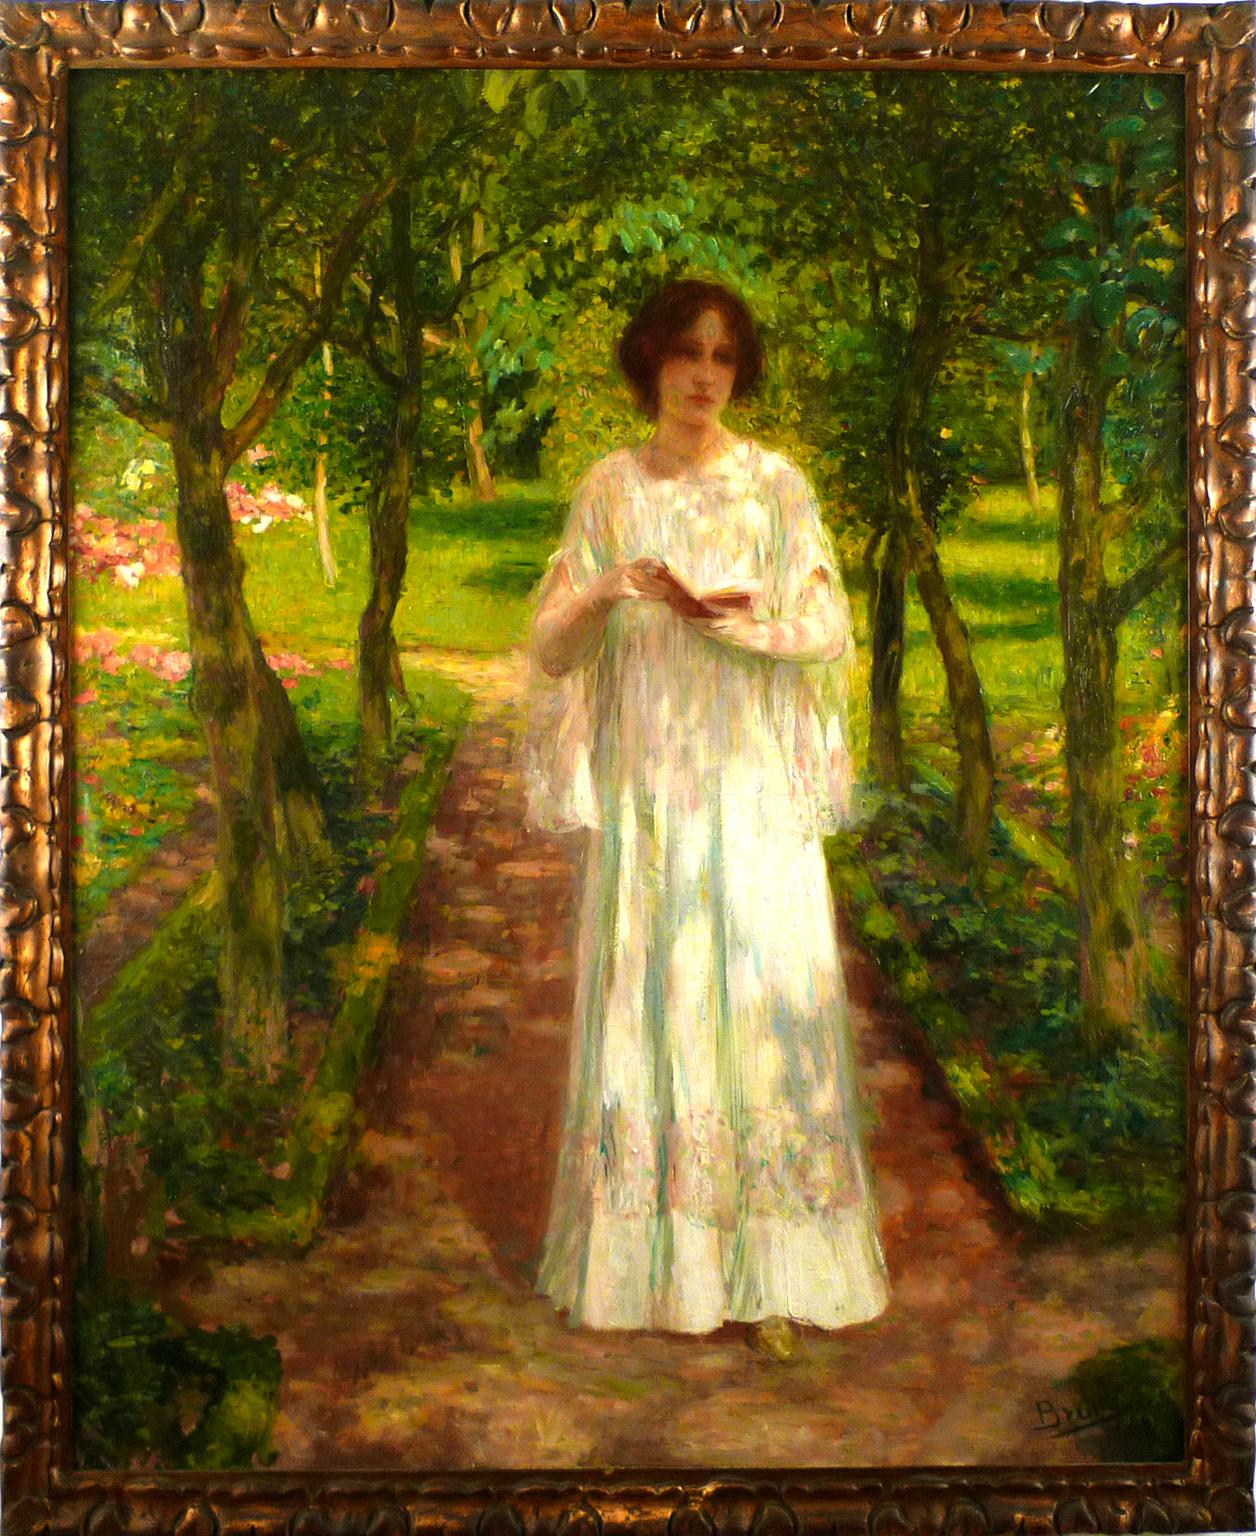 Joan Brull i Vinyoles Portrait Painting - "Reverie" 19th Century Oil on Canvas by Spanish Artist Joan Brull y Vinyoles